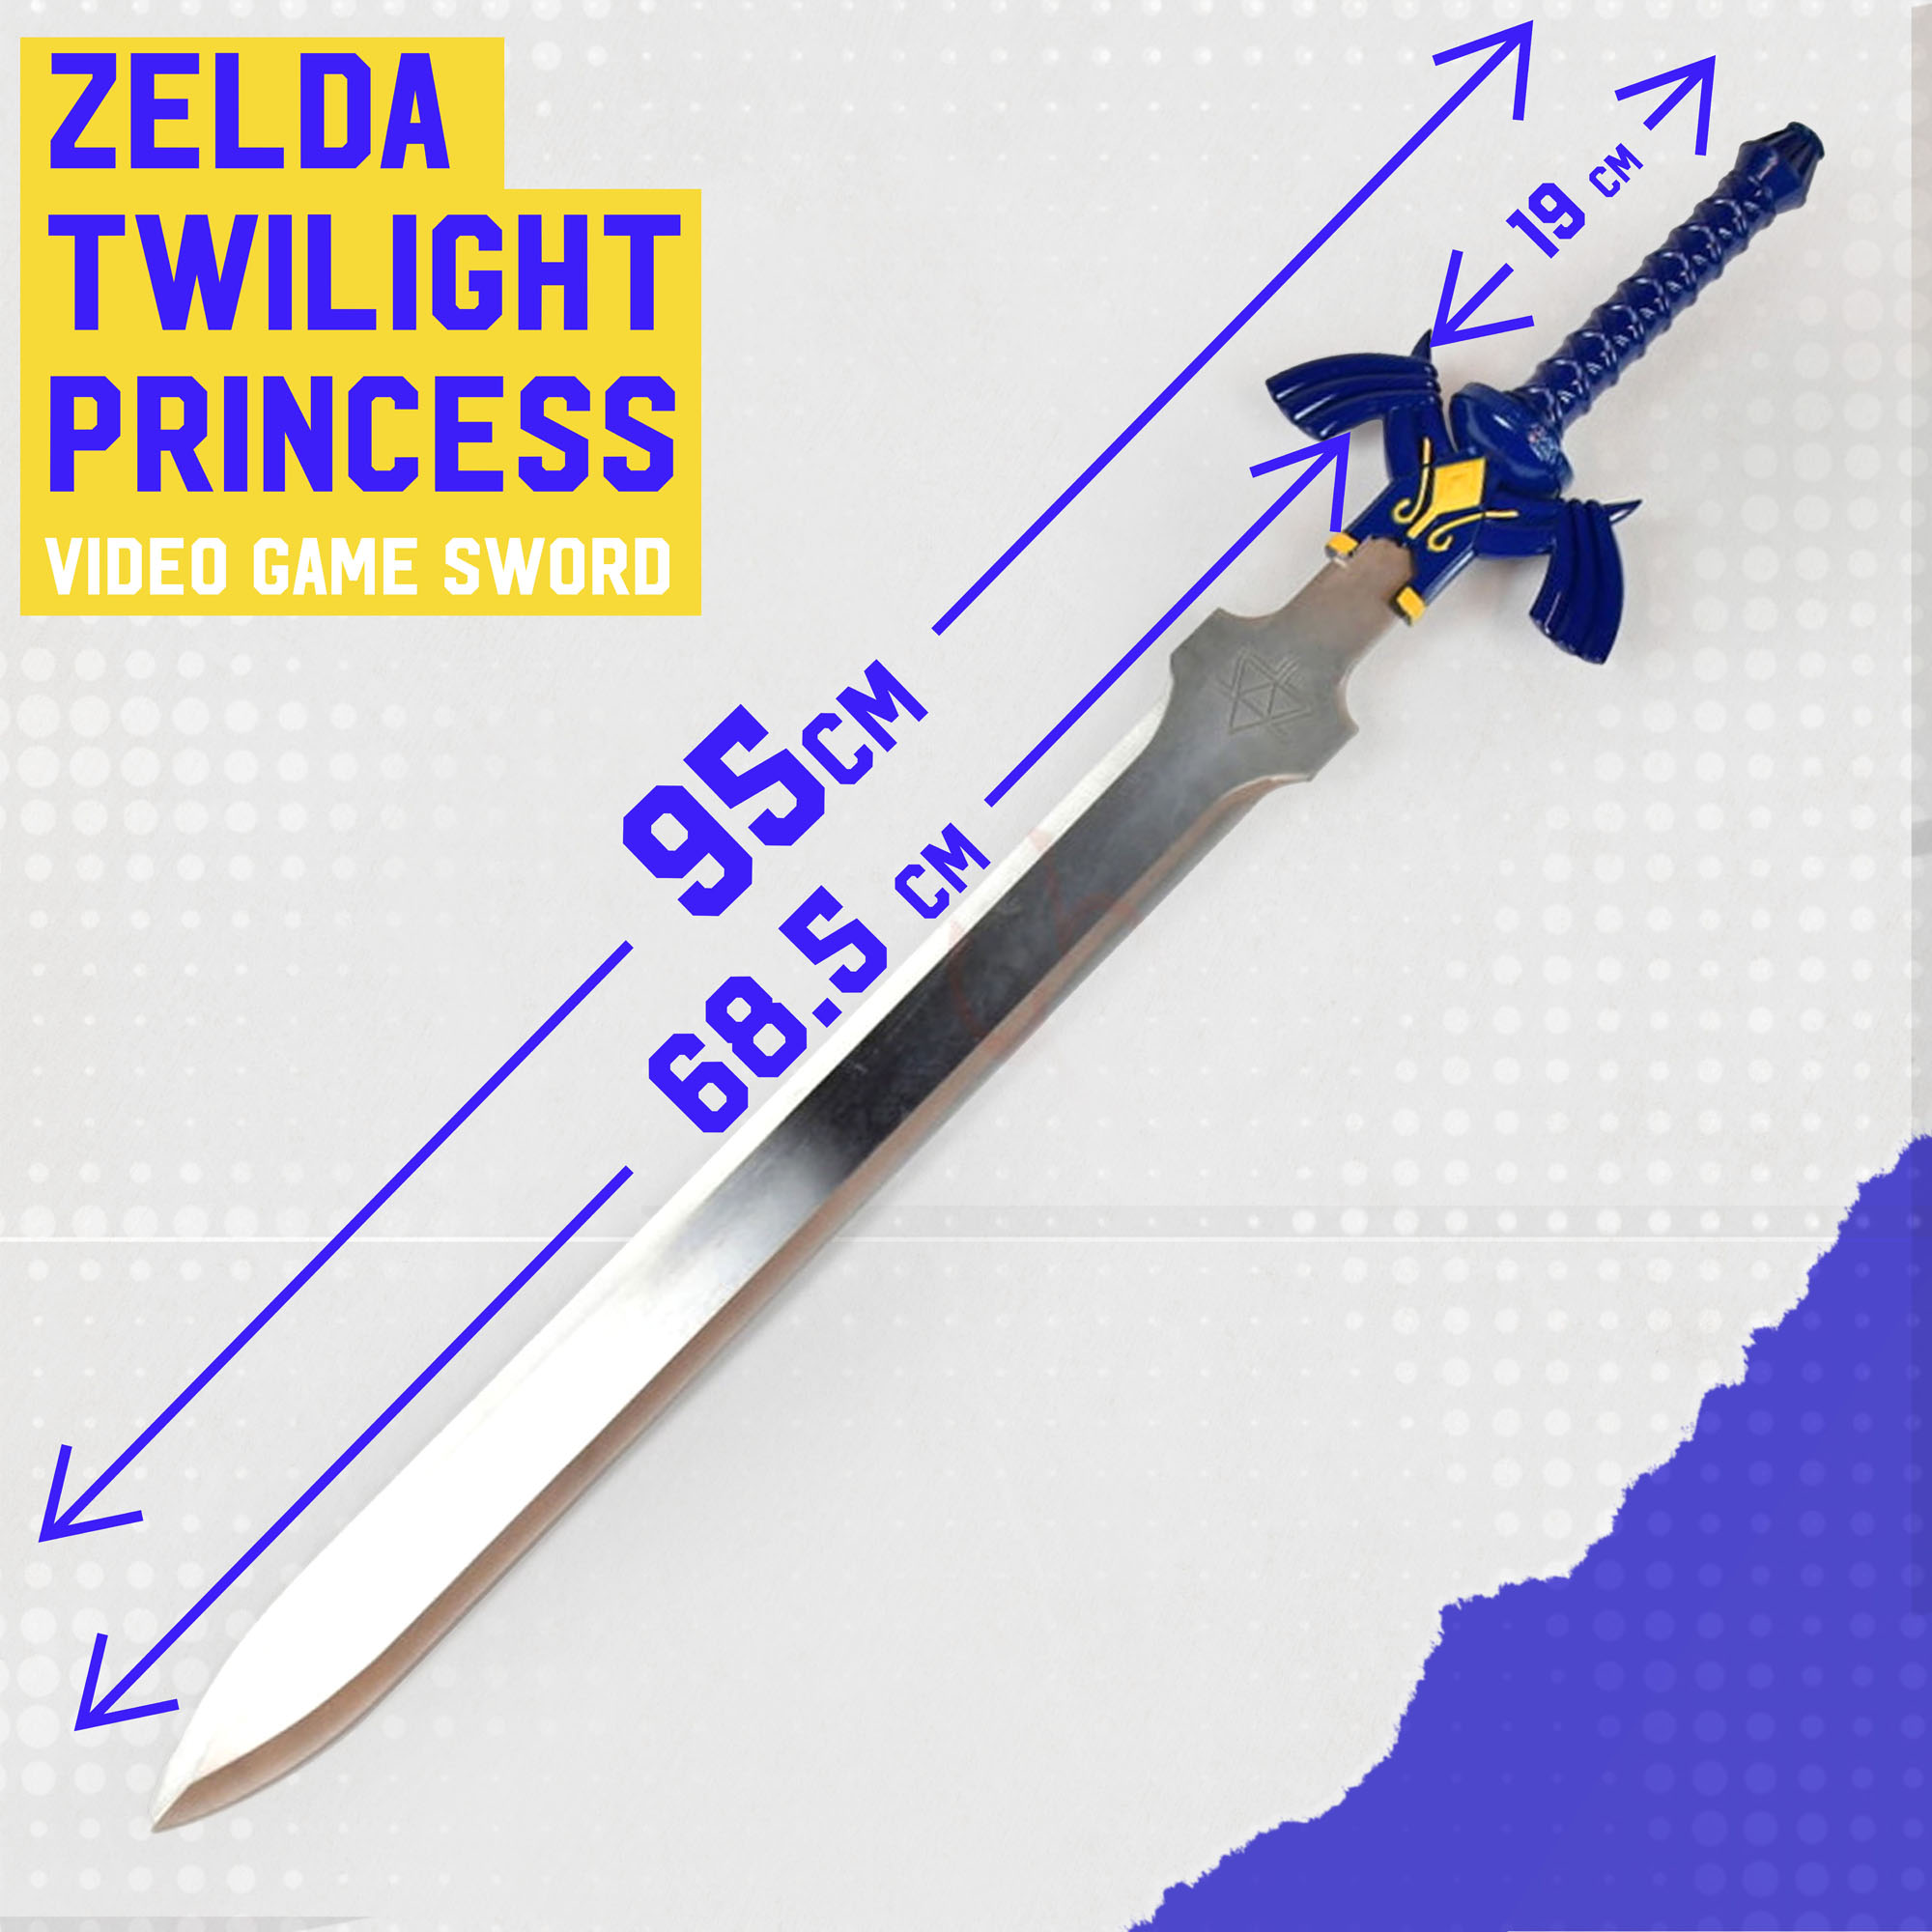 Link Master Sword Zelda Twilight Princess Sword blue with Plaque